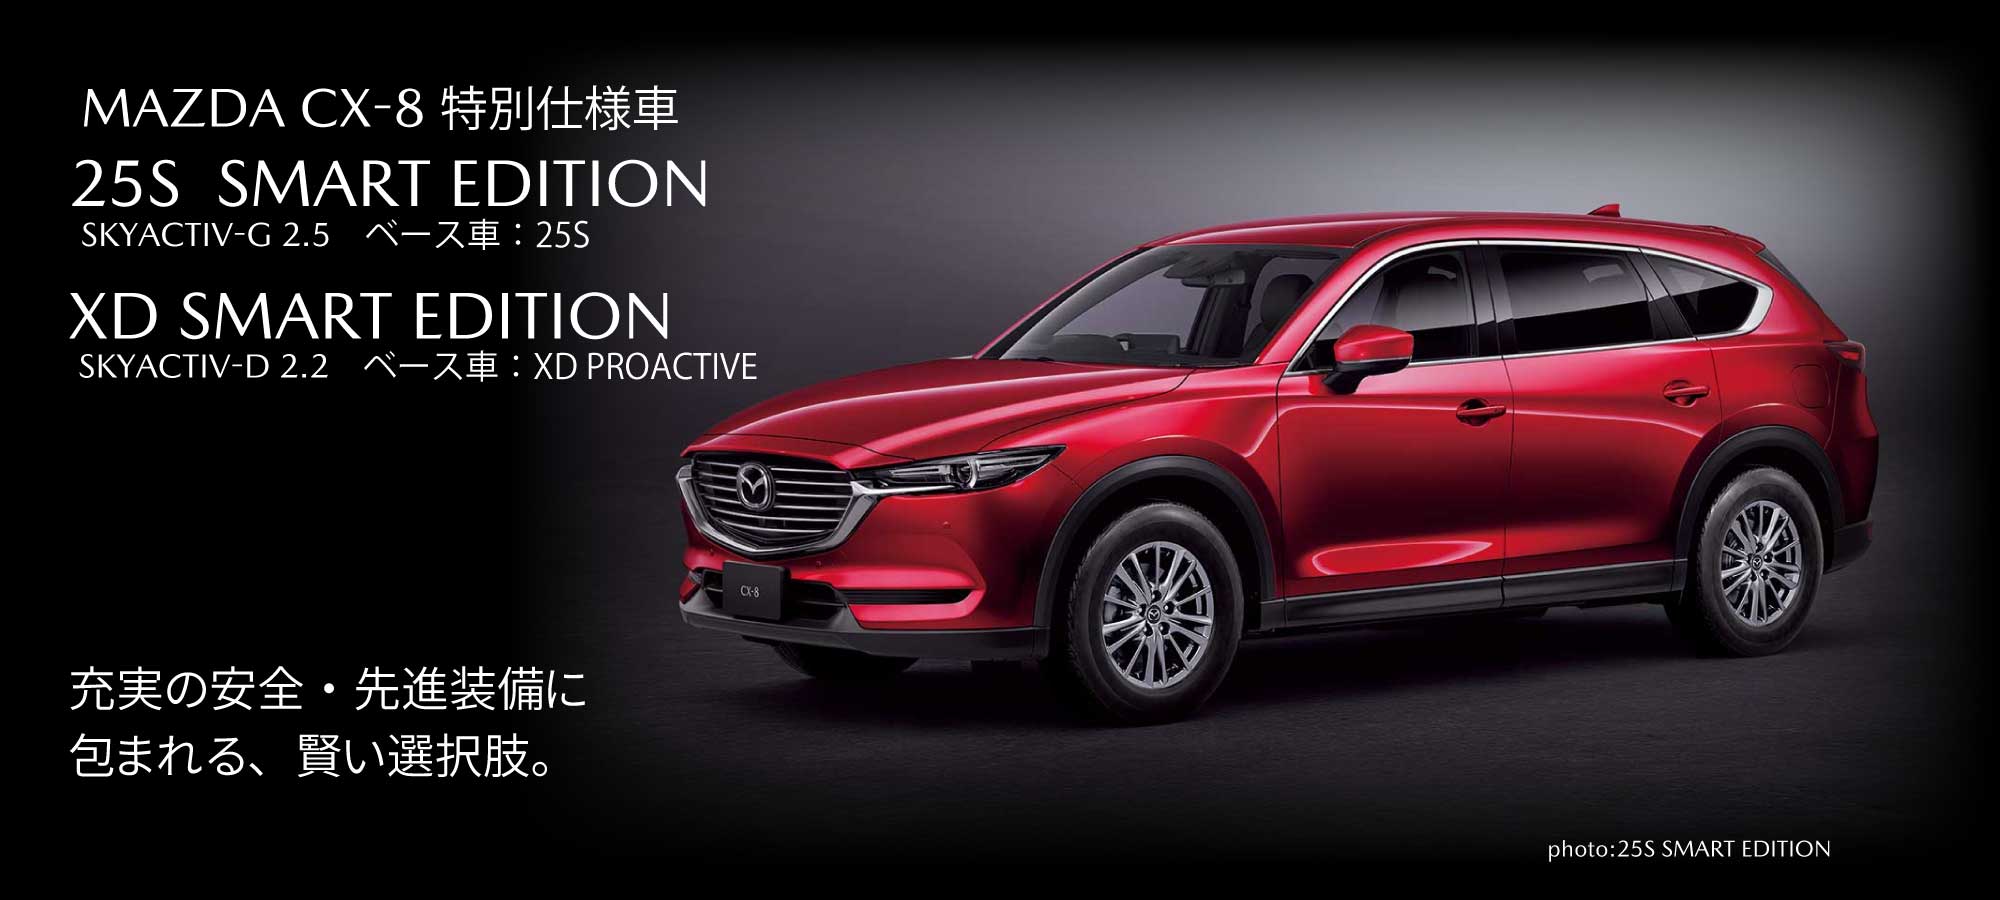 Mazda Cx 8 特別仕様車 Smart Edition 大阪 関西でマツダ車のご用命は大阪マツダ販売株式会社へ